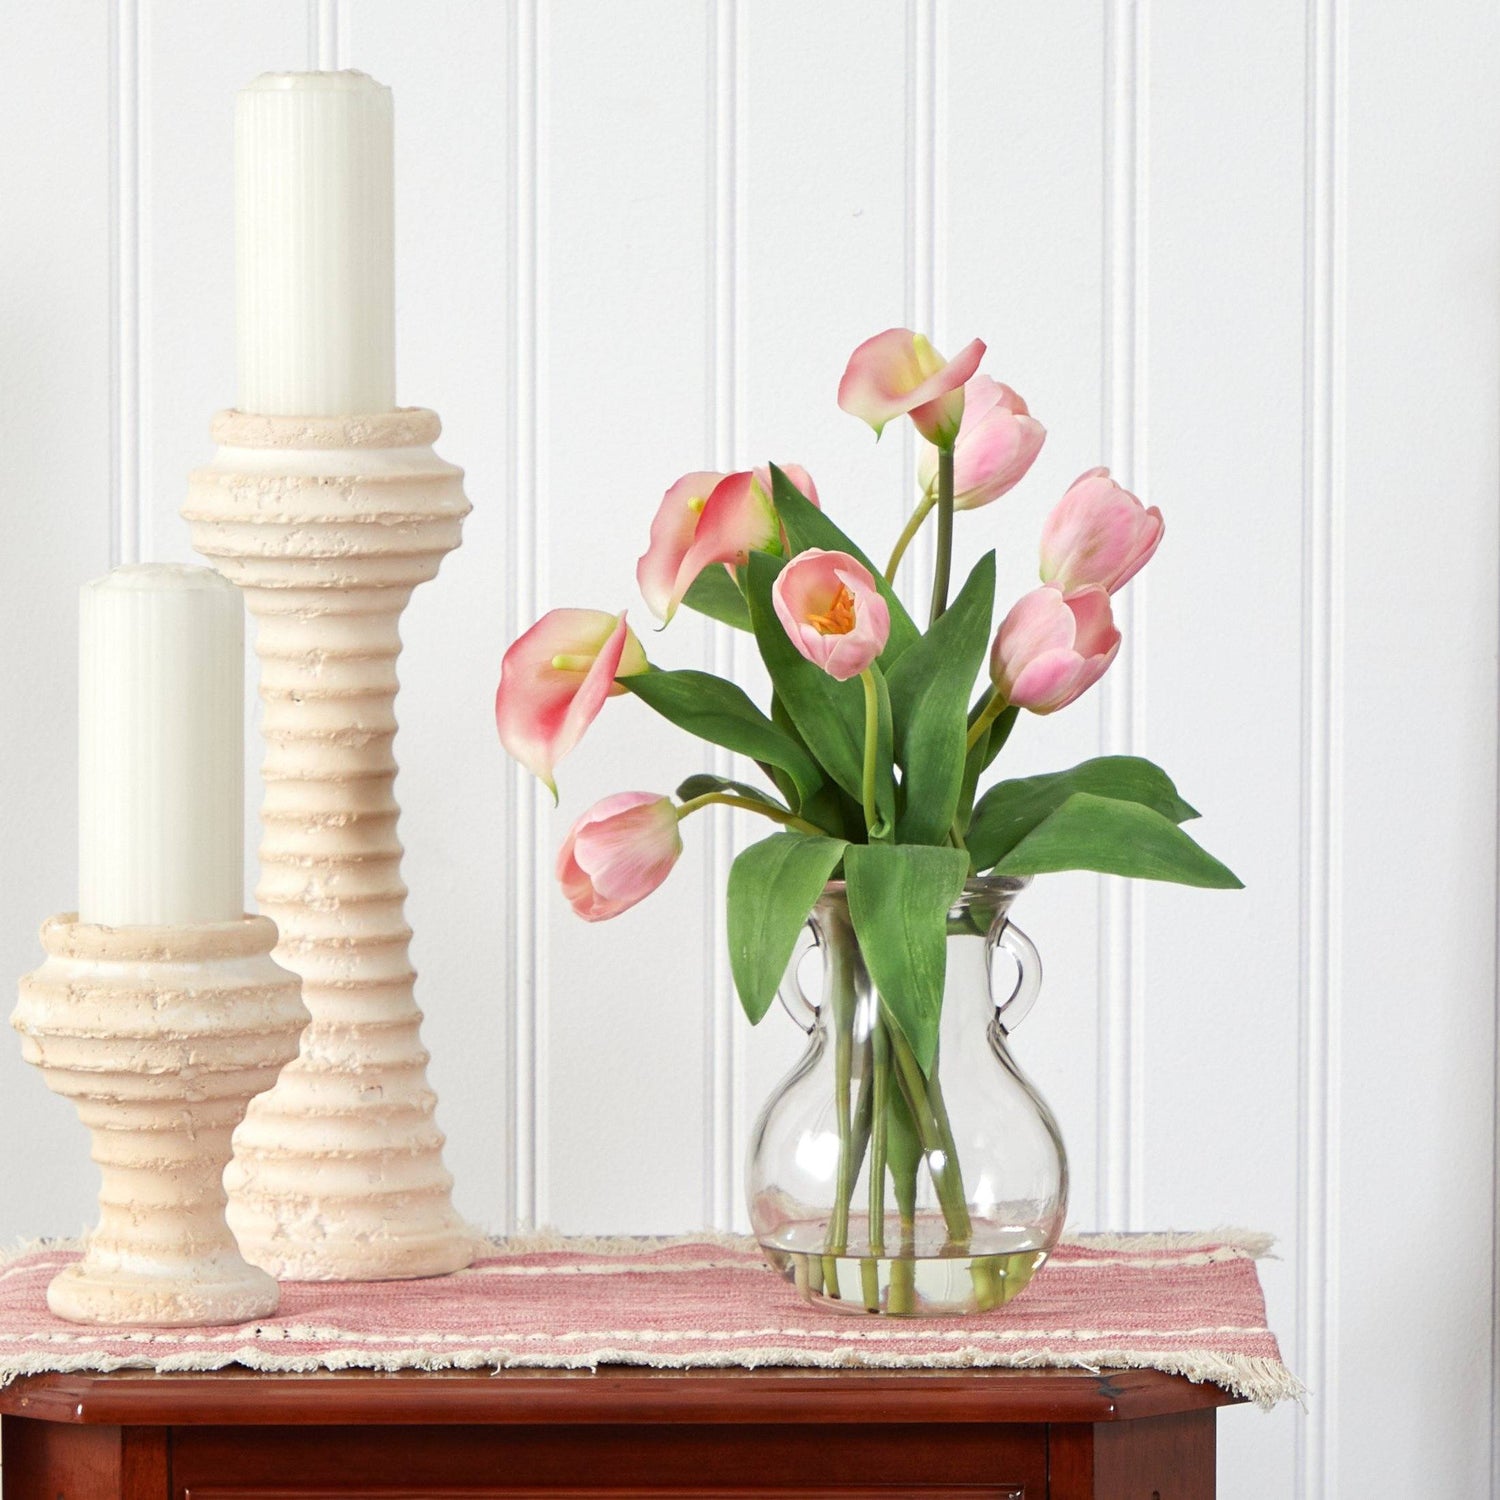 Calla Lily & Tulips Artificial Arrangement in Decorative Vase